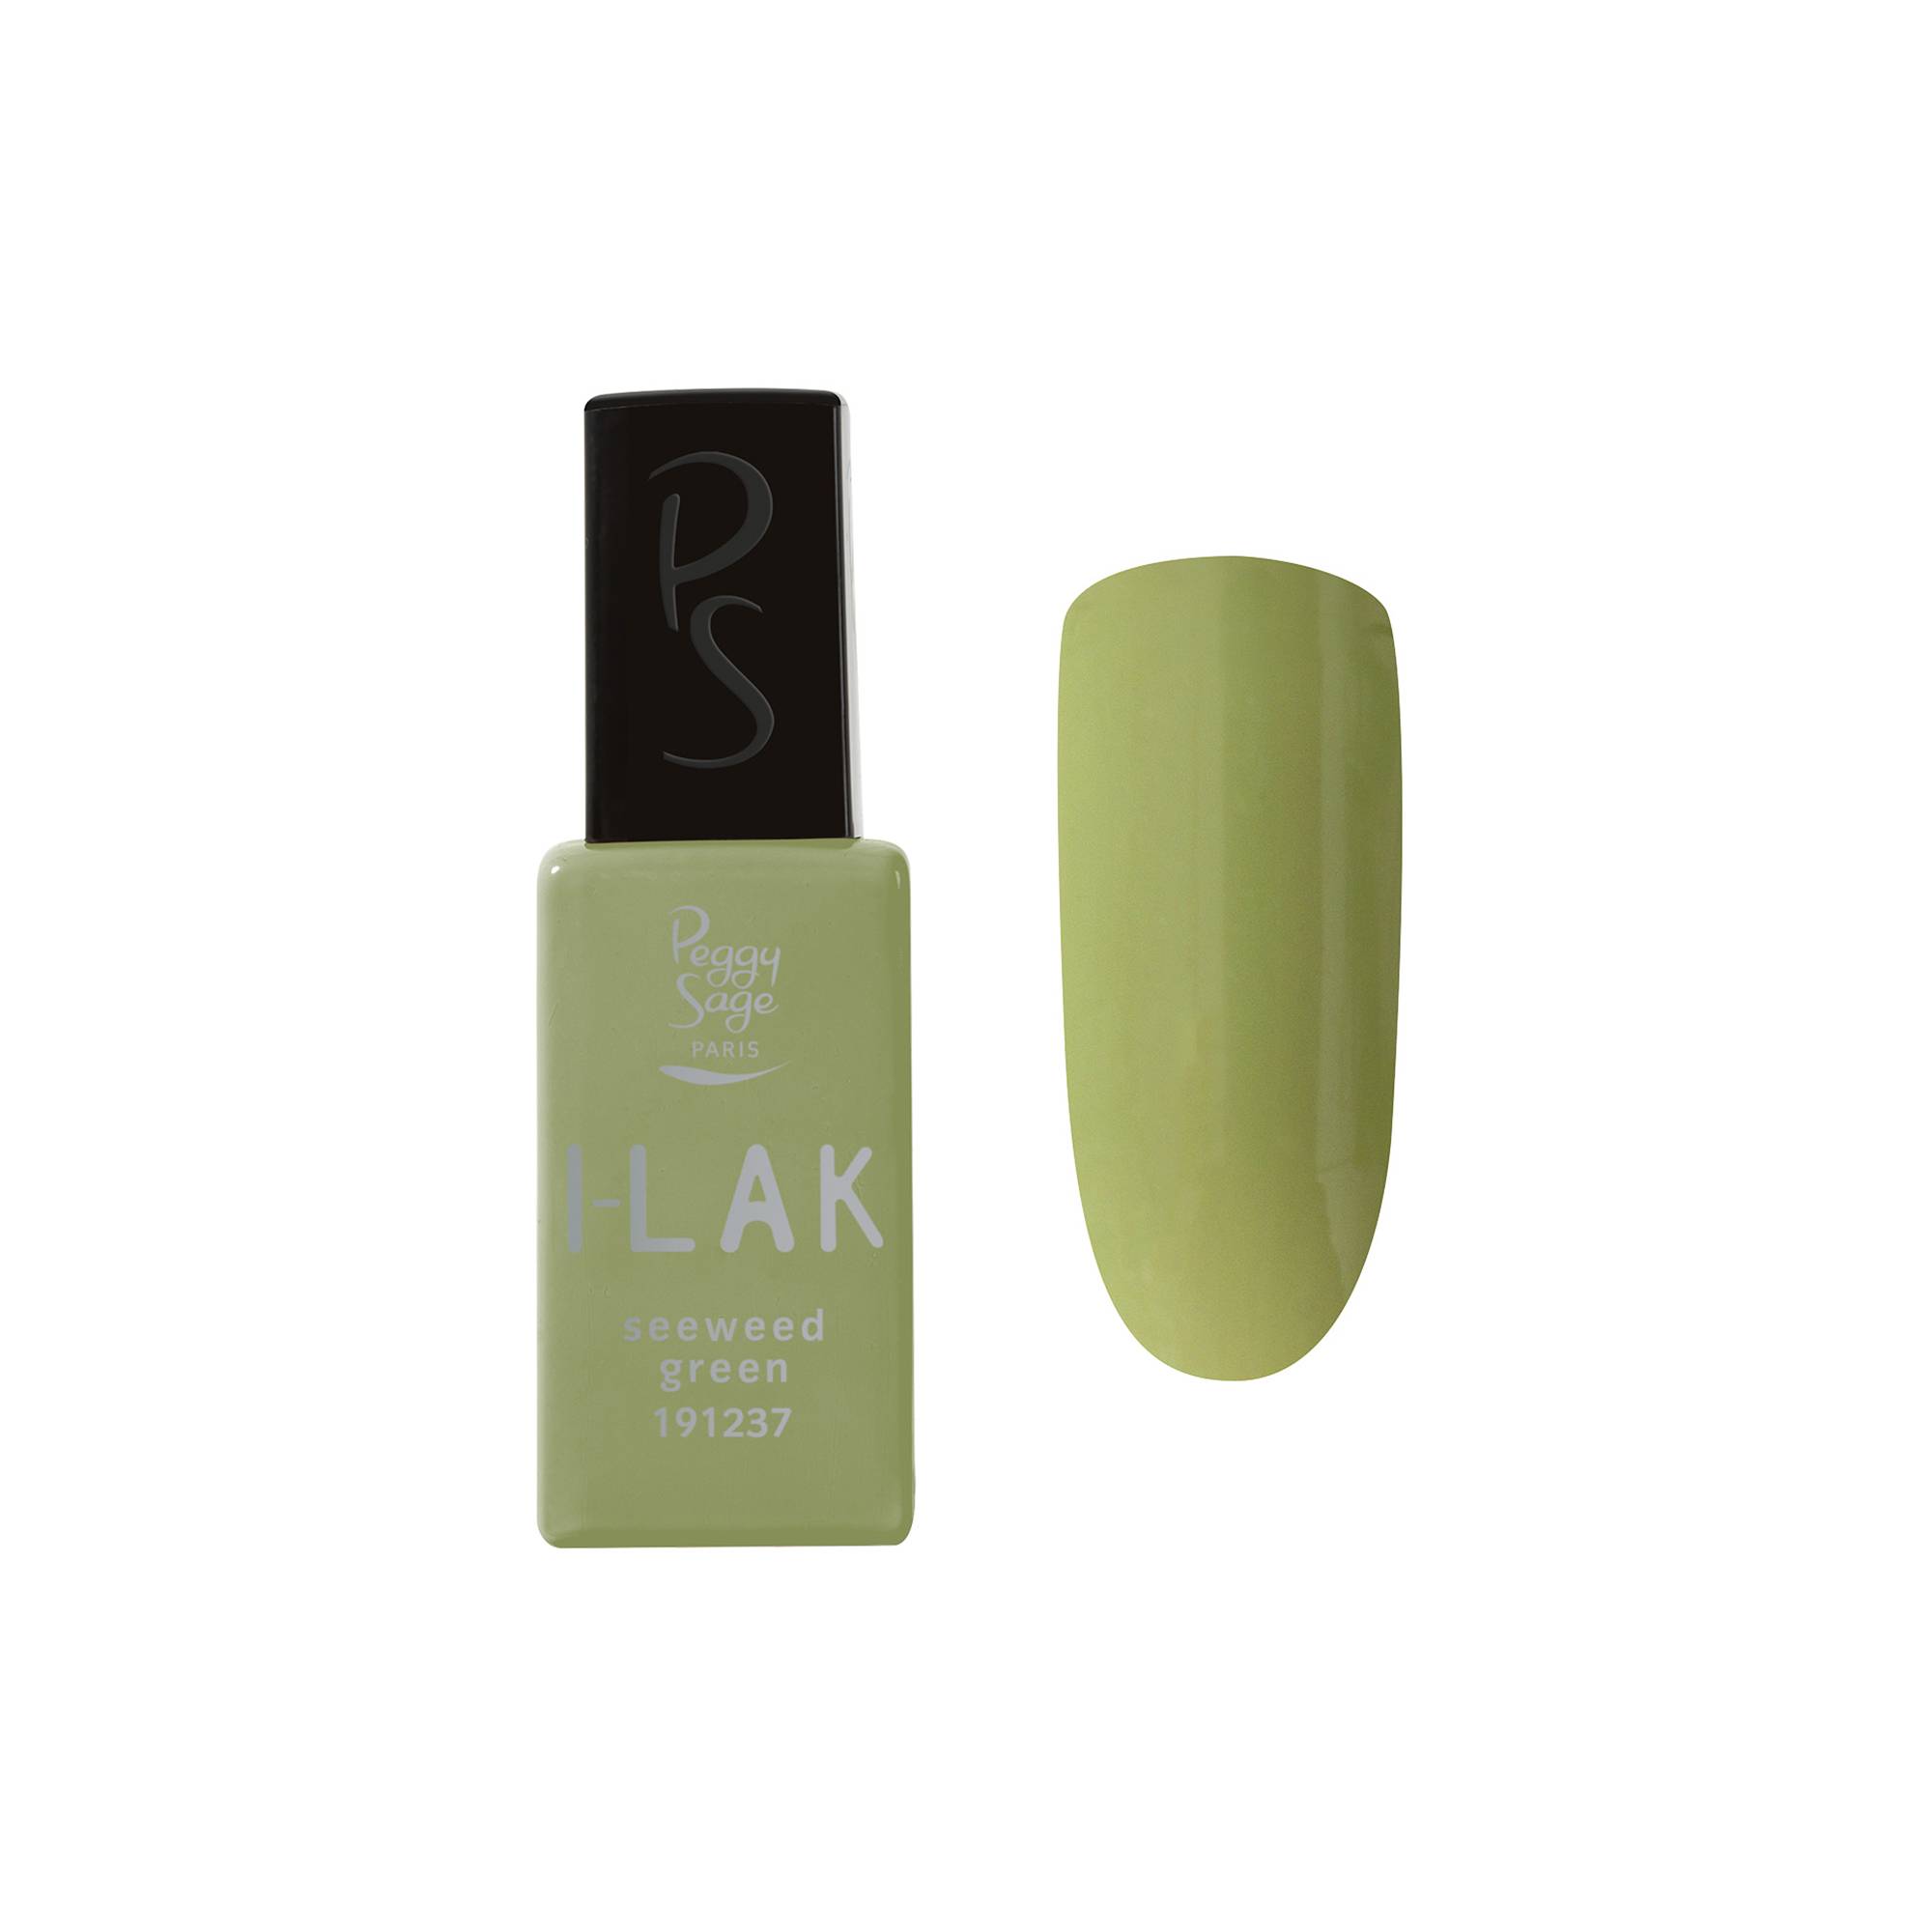 I-LAK soak off gel polish seaweed green del marchio Peggy Sage Capacità 11ml - 1